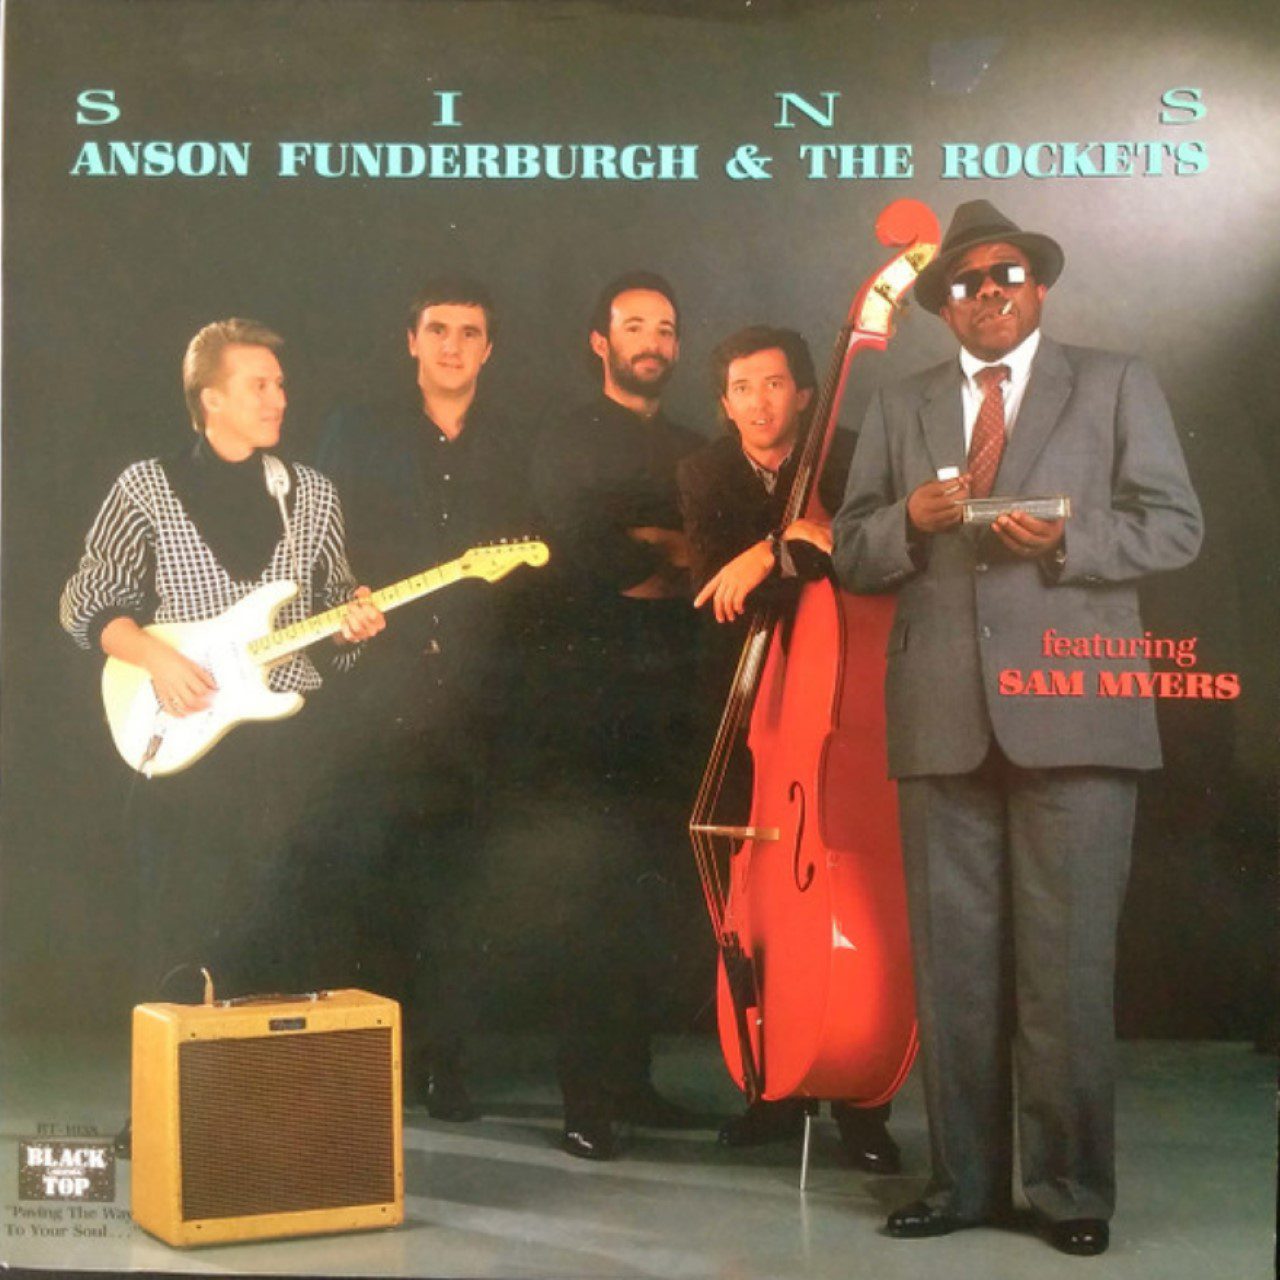 Anson Funderburgh & The Rockets – Sins cover album